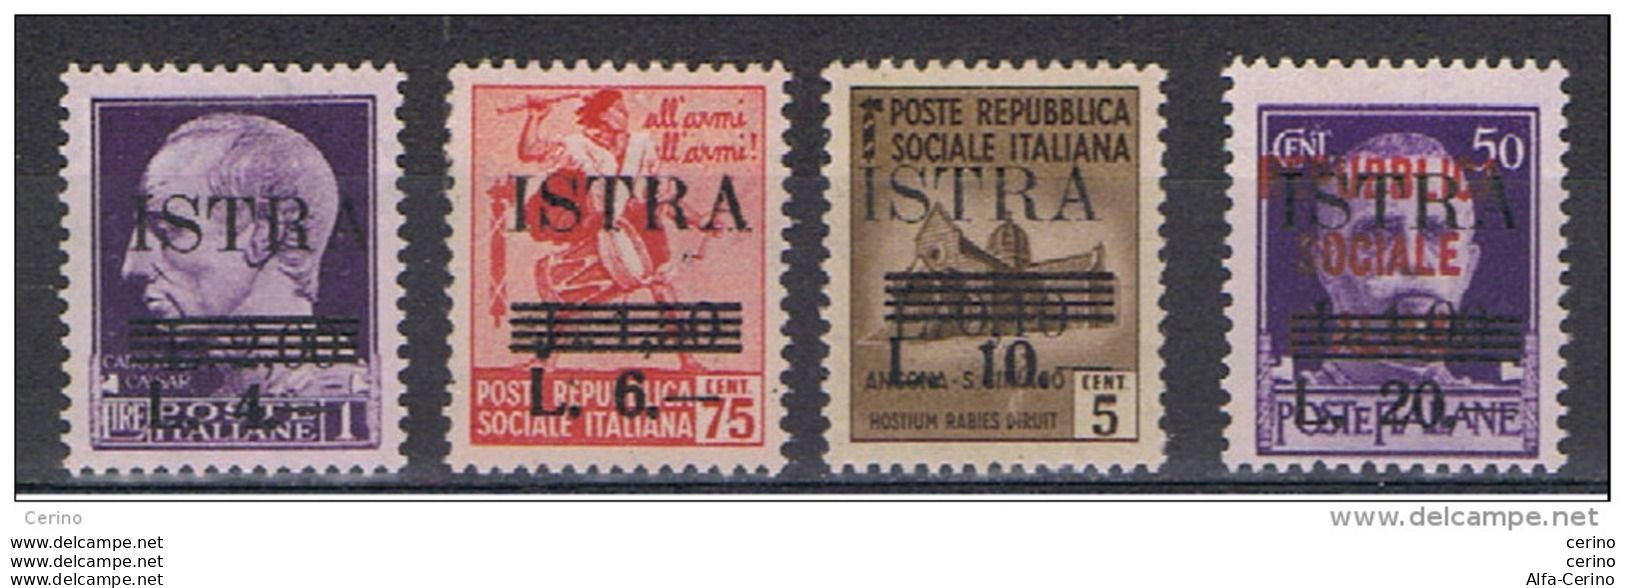 ISTRIA - OCC. JUGOSLAVA:  1945  SOPRSTAMPATI  -  S. CPL. 4  VAL. N. -  SASS. 37/40 - Occup. Iugoslava: Istria